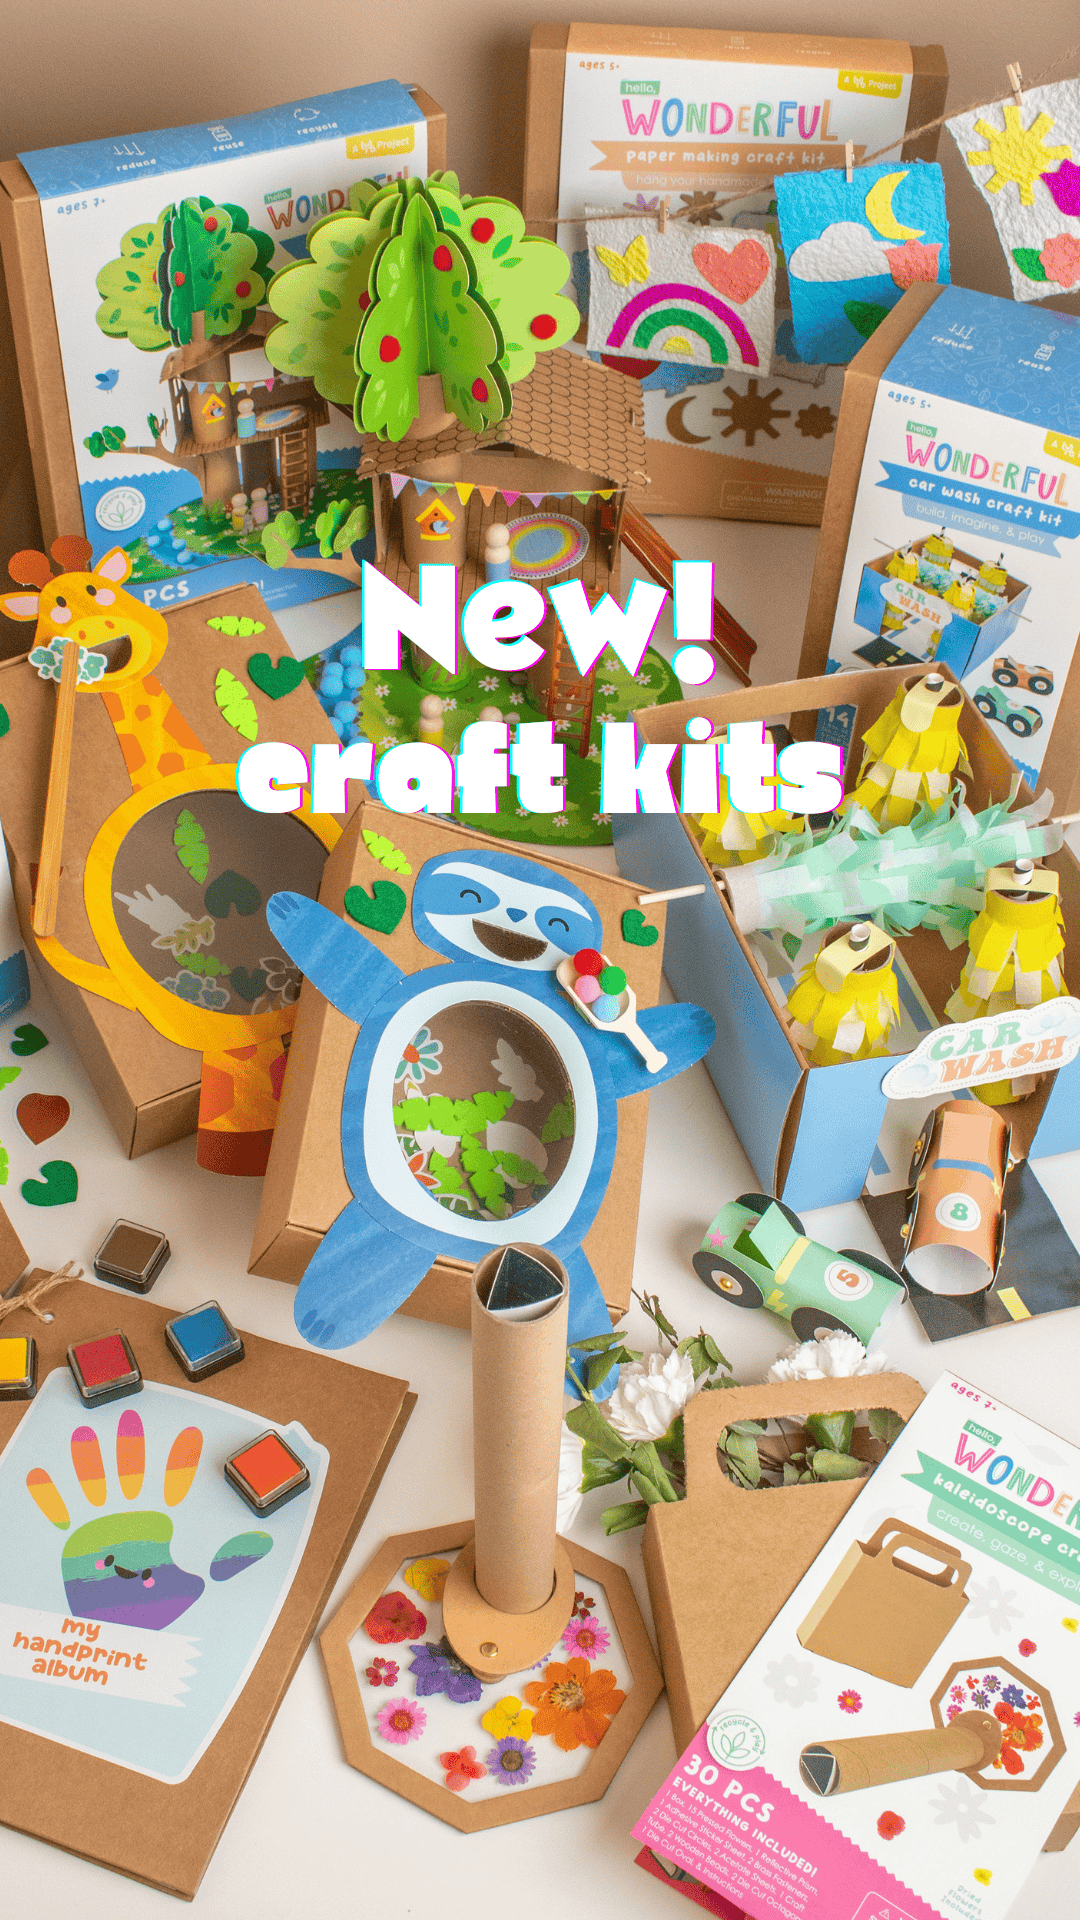 Hello Wonderful Craft Kits!